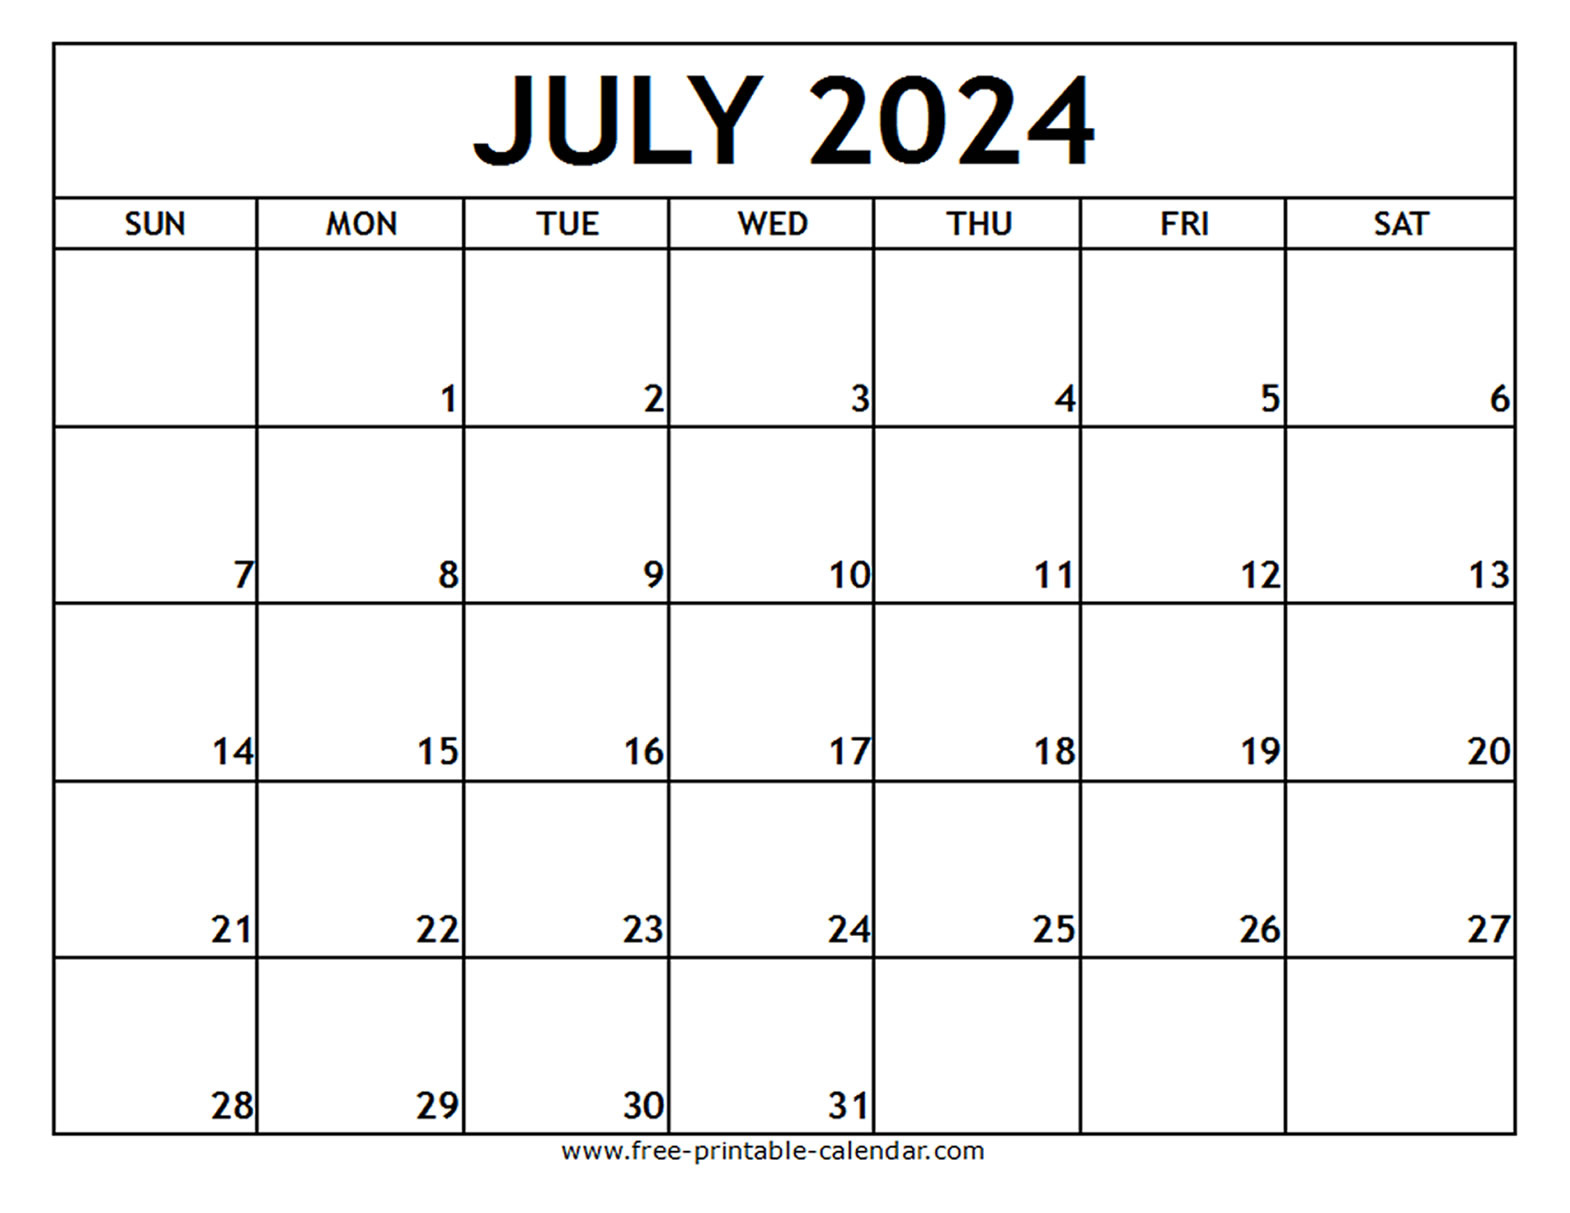 July 2024 Printable Calendar - Free-Printable-Calendar with regard to Free Printable July 2024 Calendar Pdf